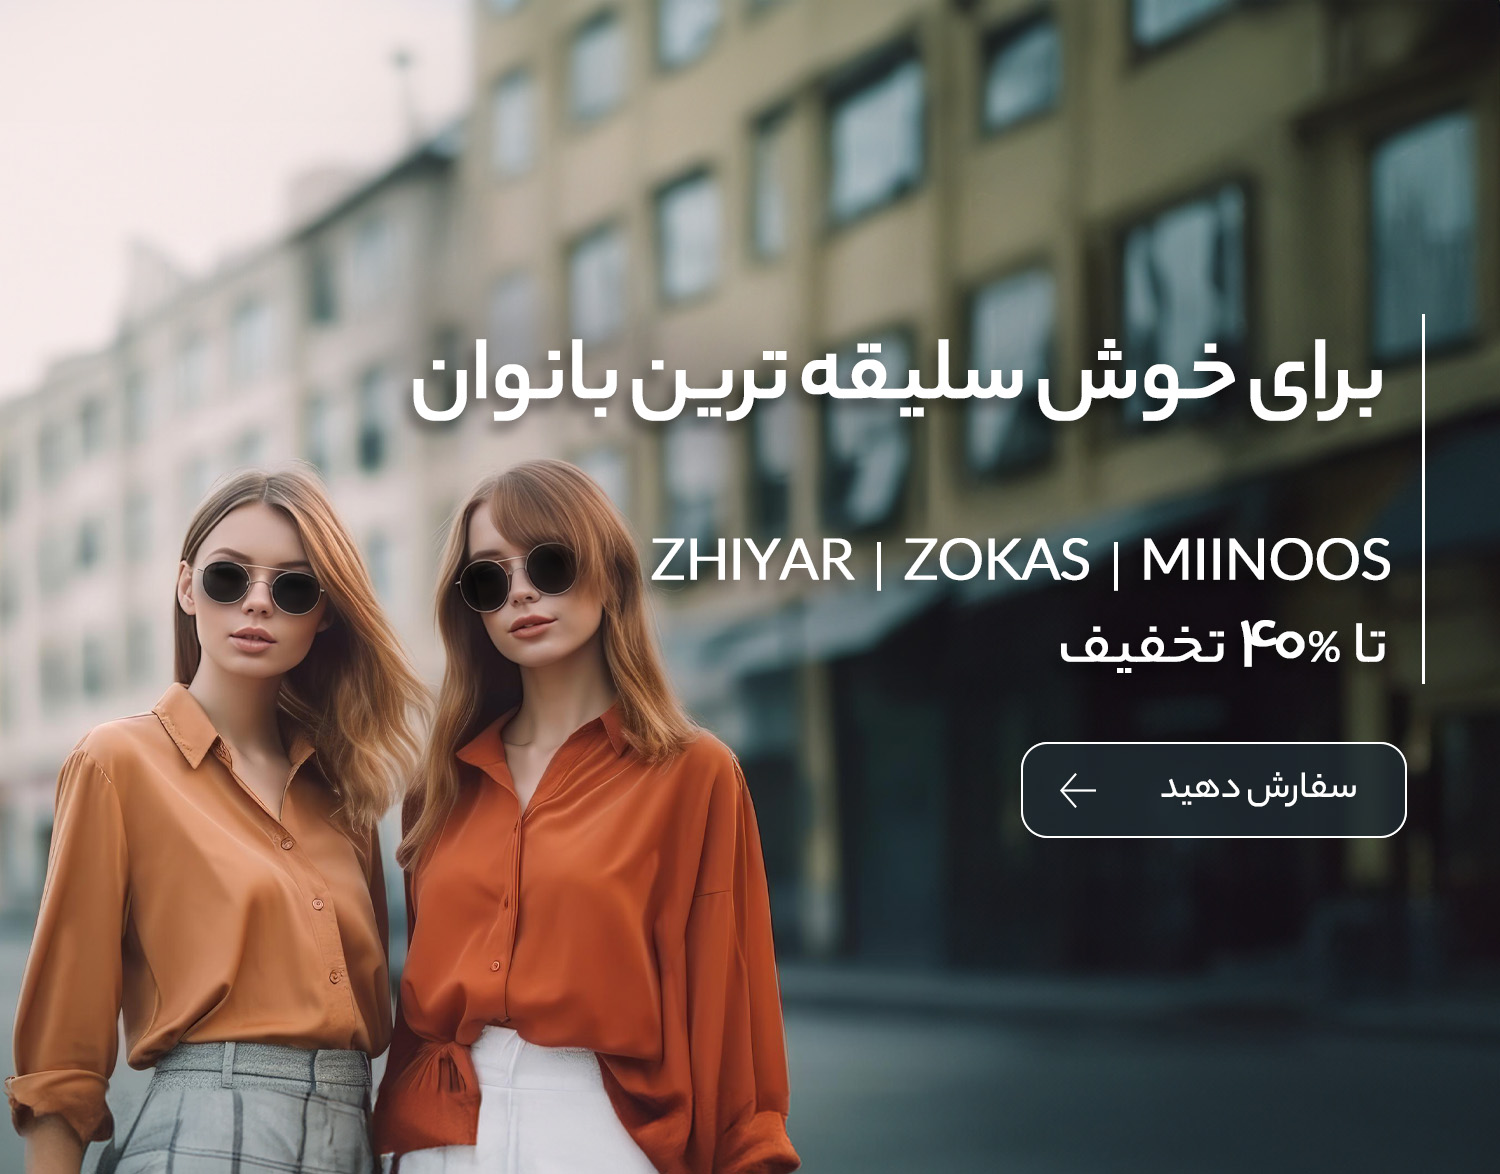  Zhiyar / Zokas / Miinoos